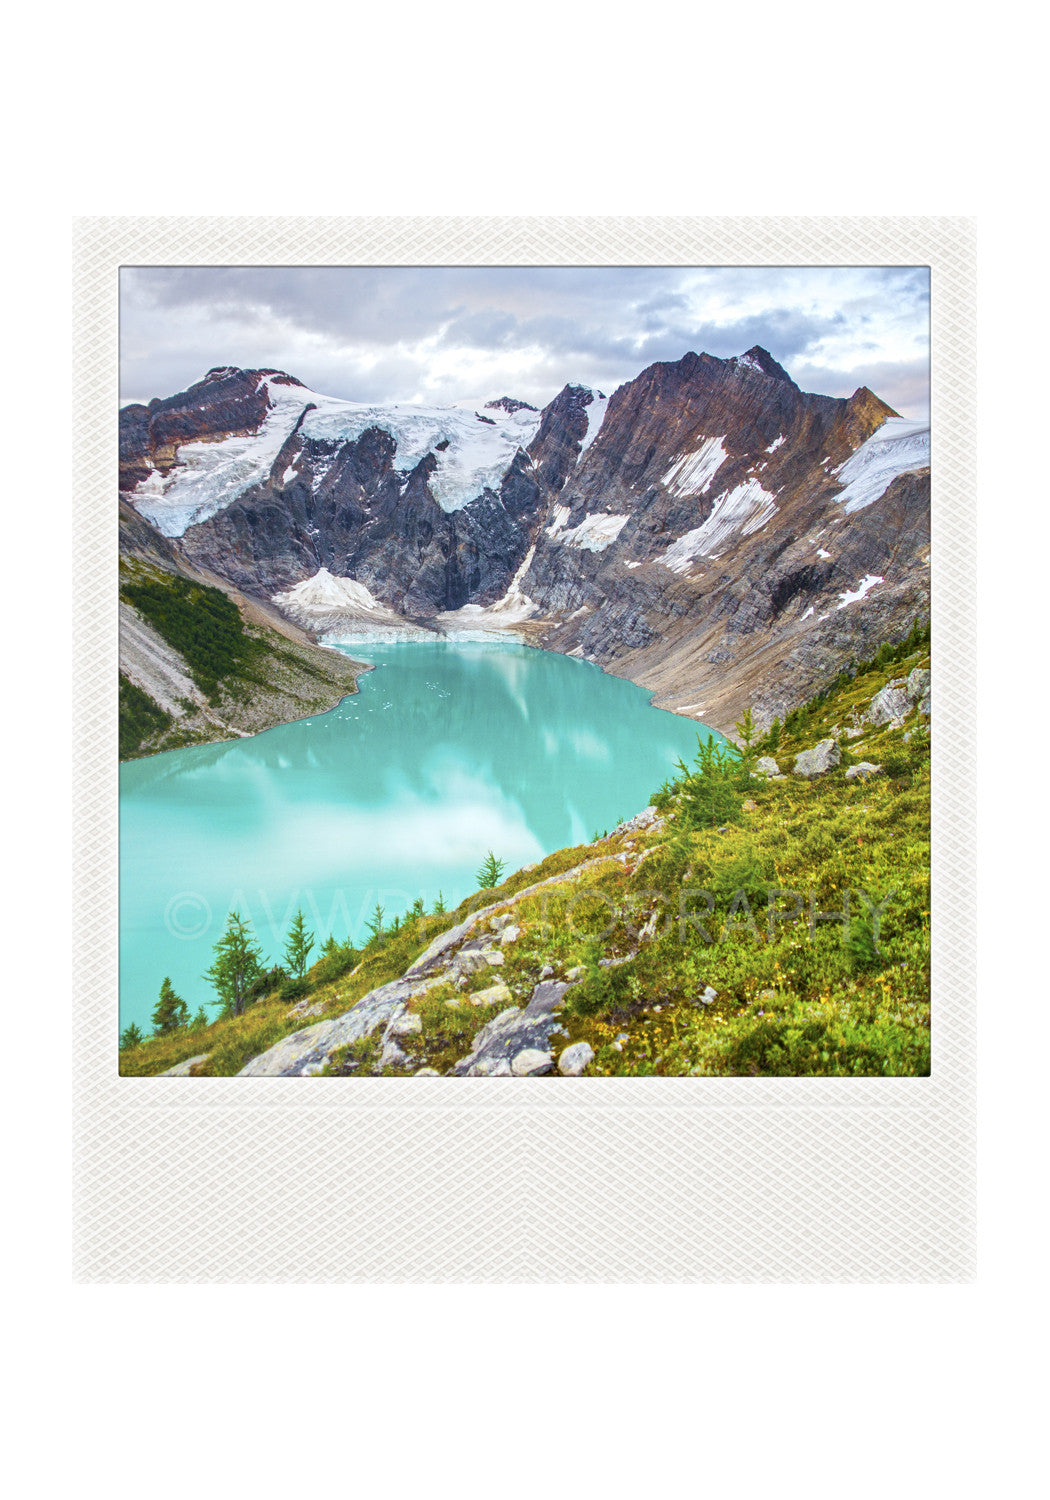 Imán Polaroid metálico<br> Lago alpino // Columbia Británica